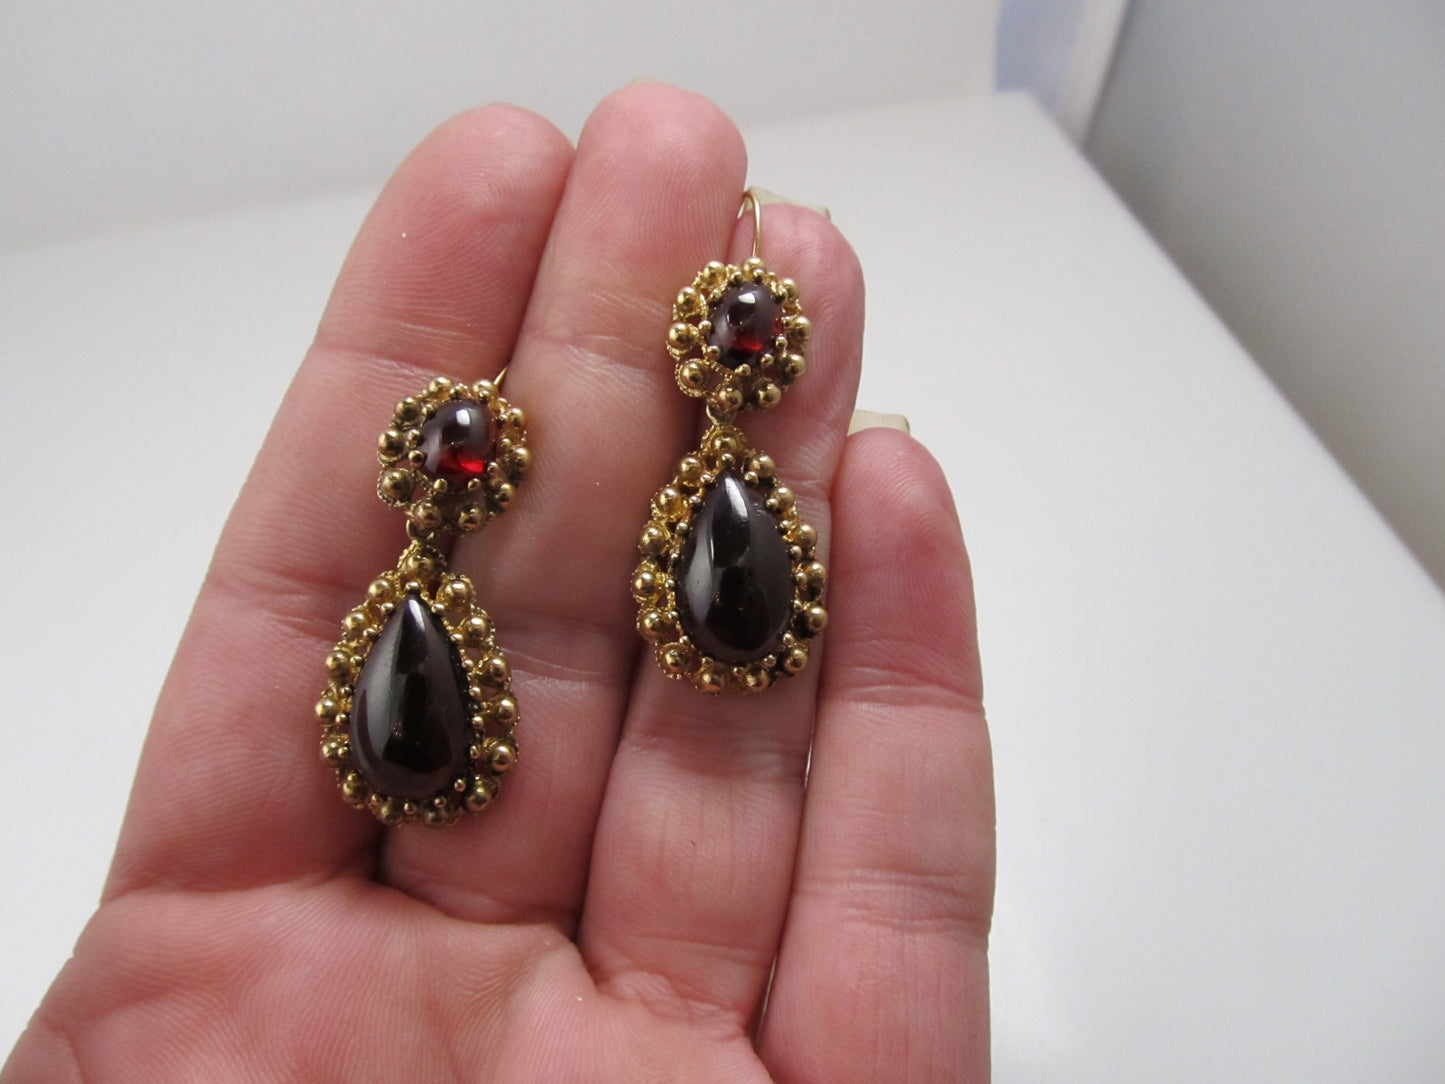 Vintage large garnet drop earrings, 14k yellow gold